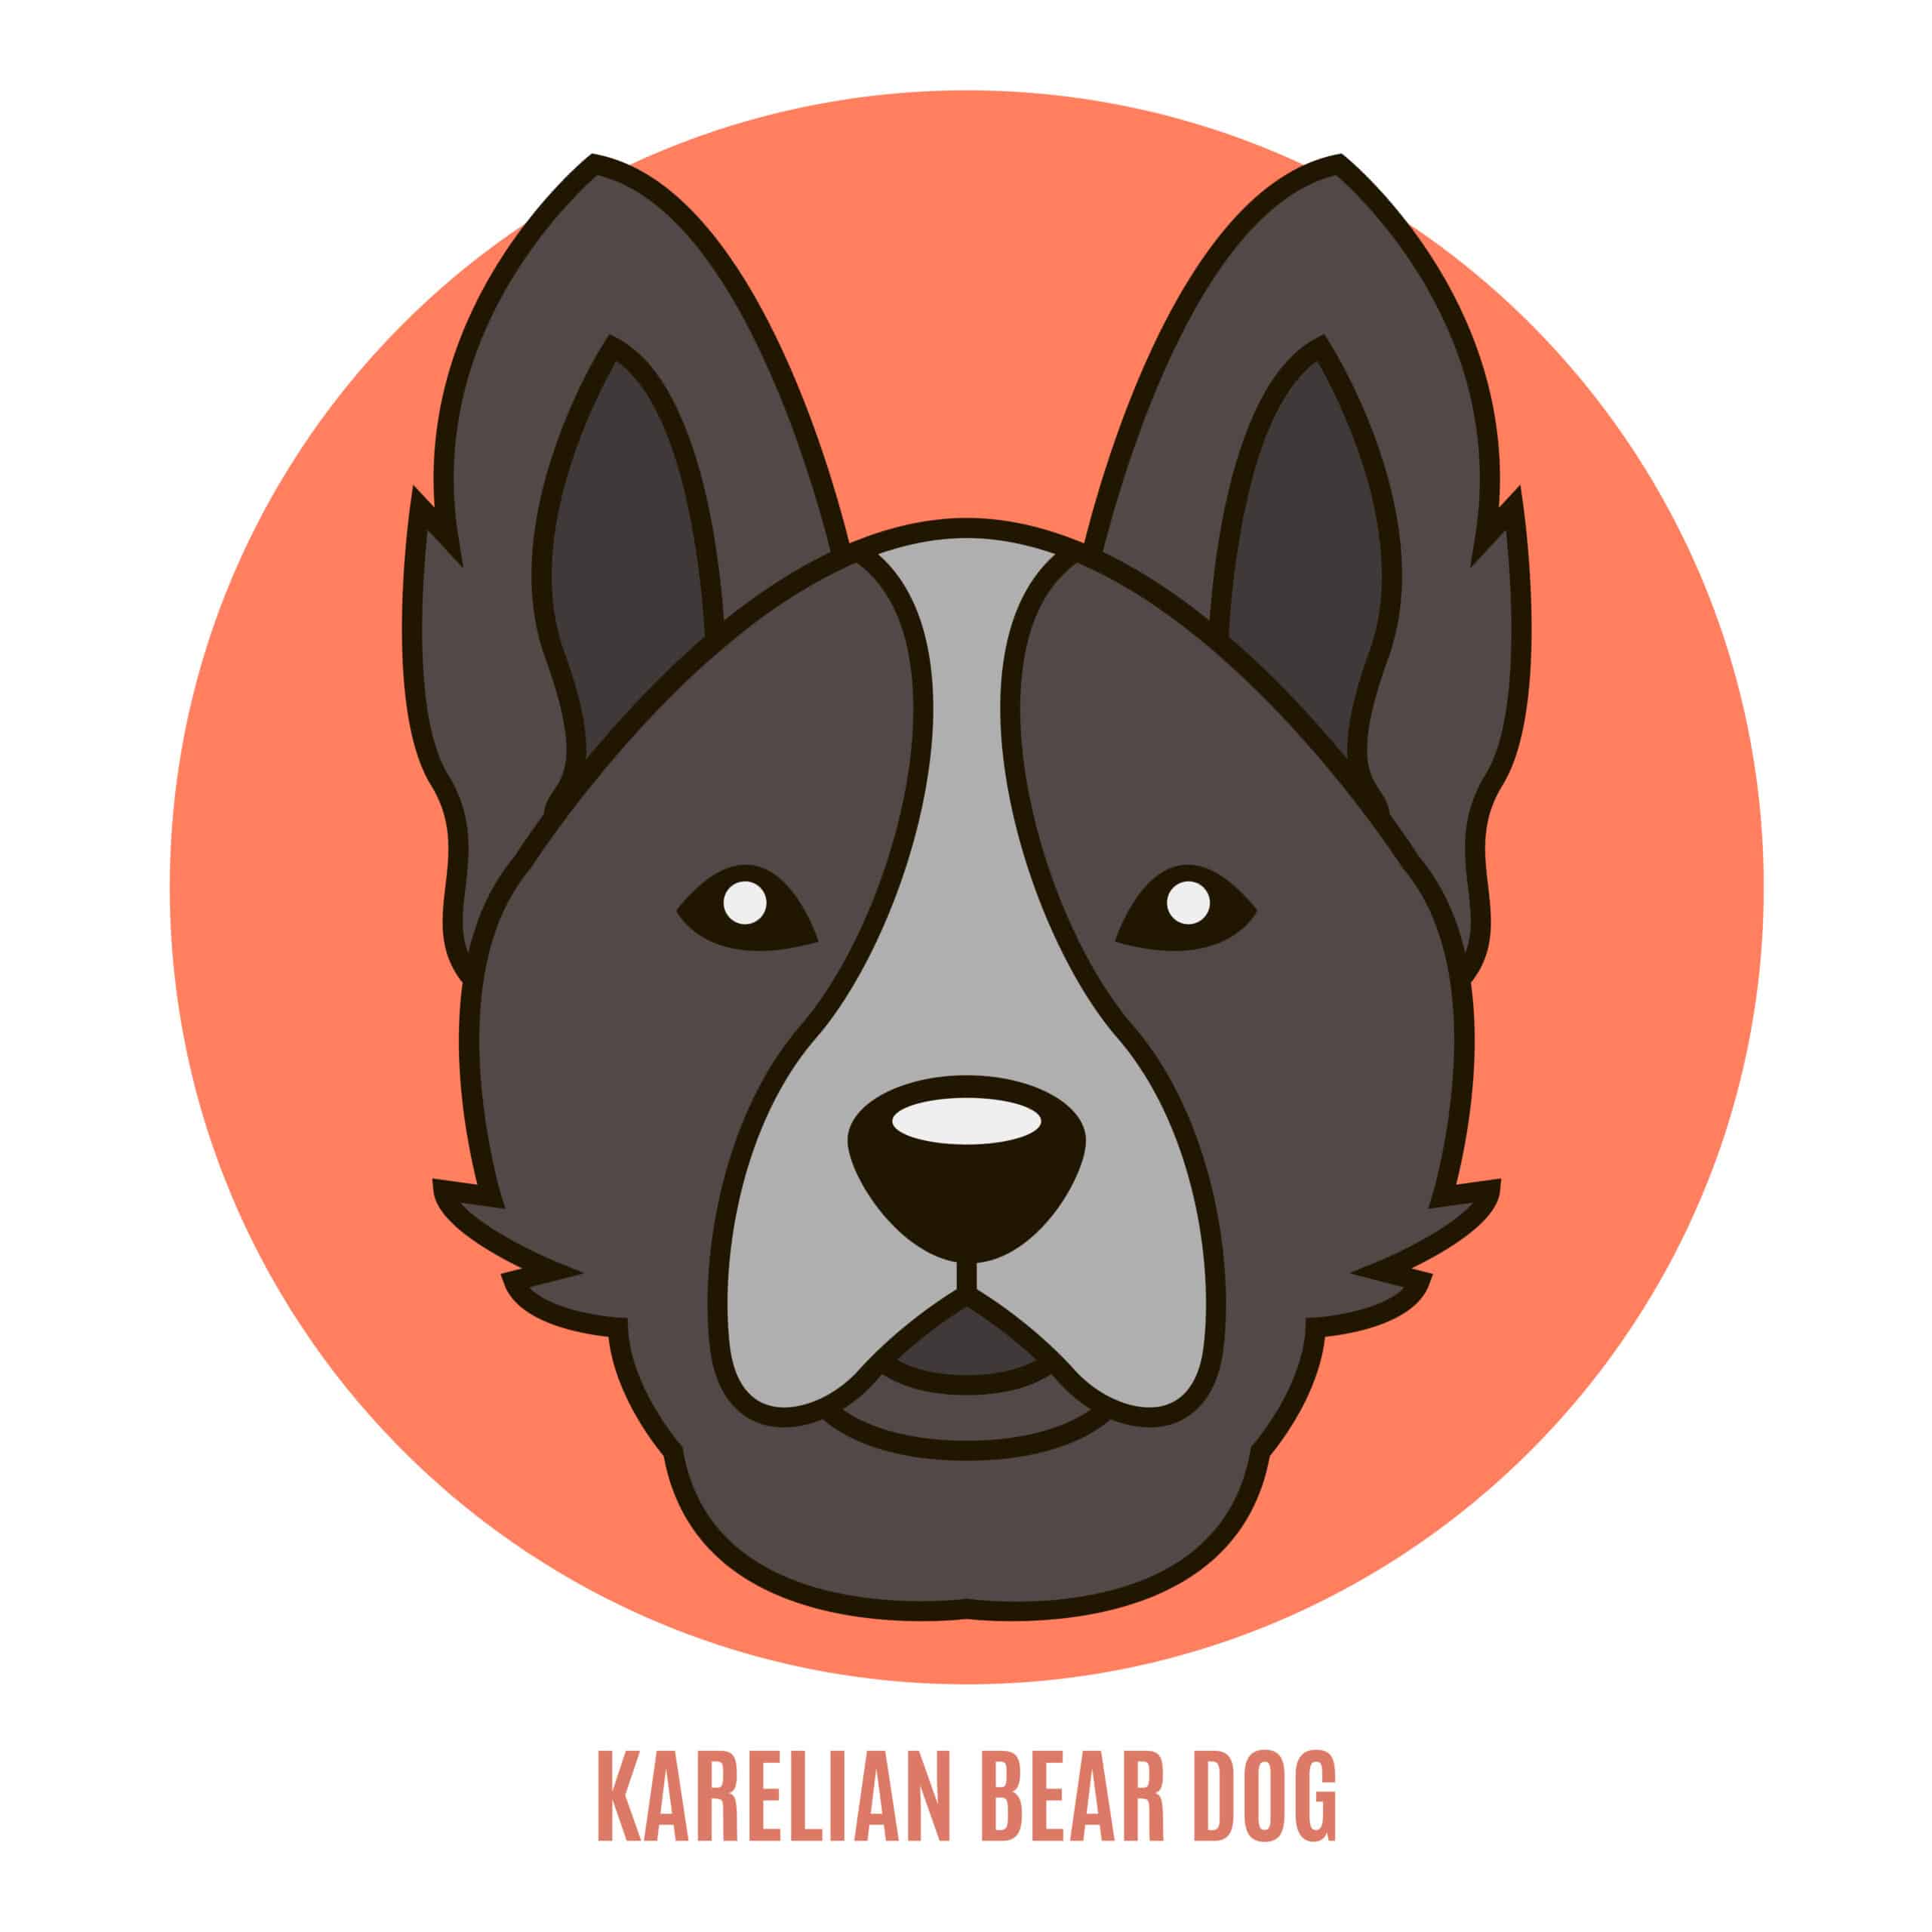 Karelian bear dog history